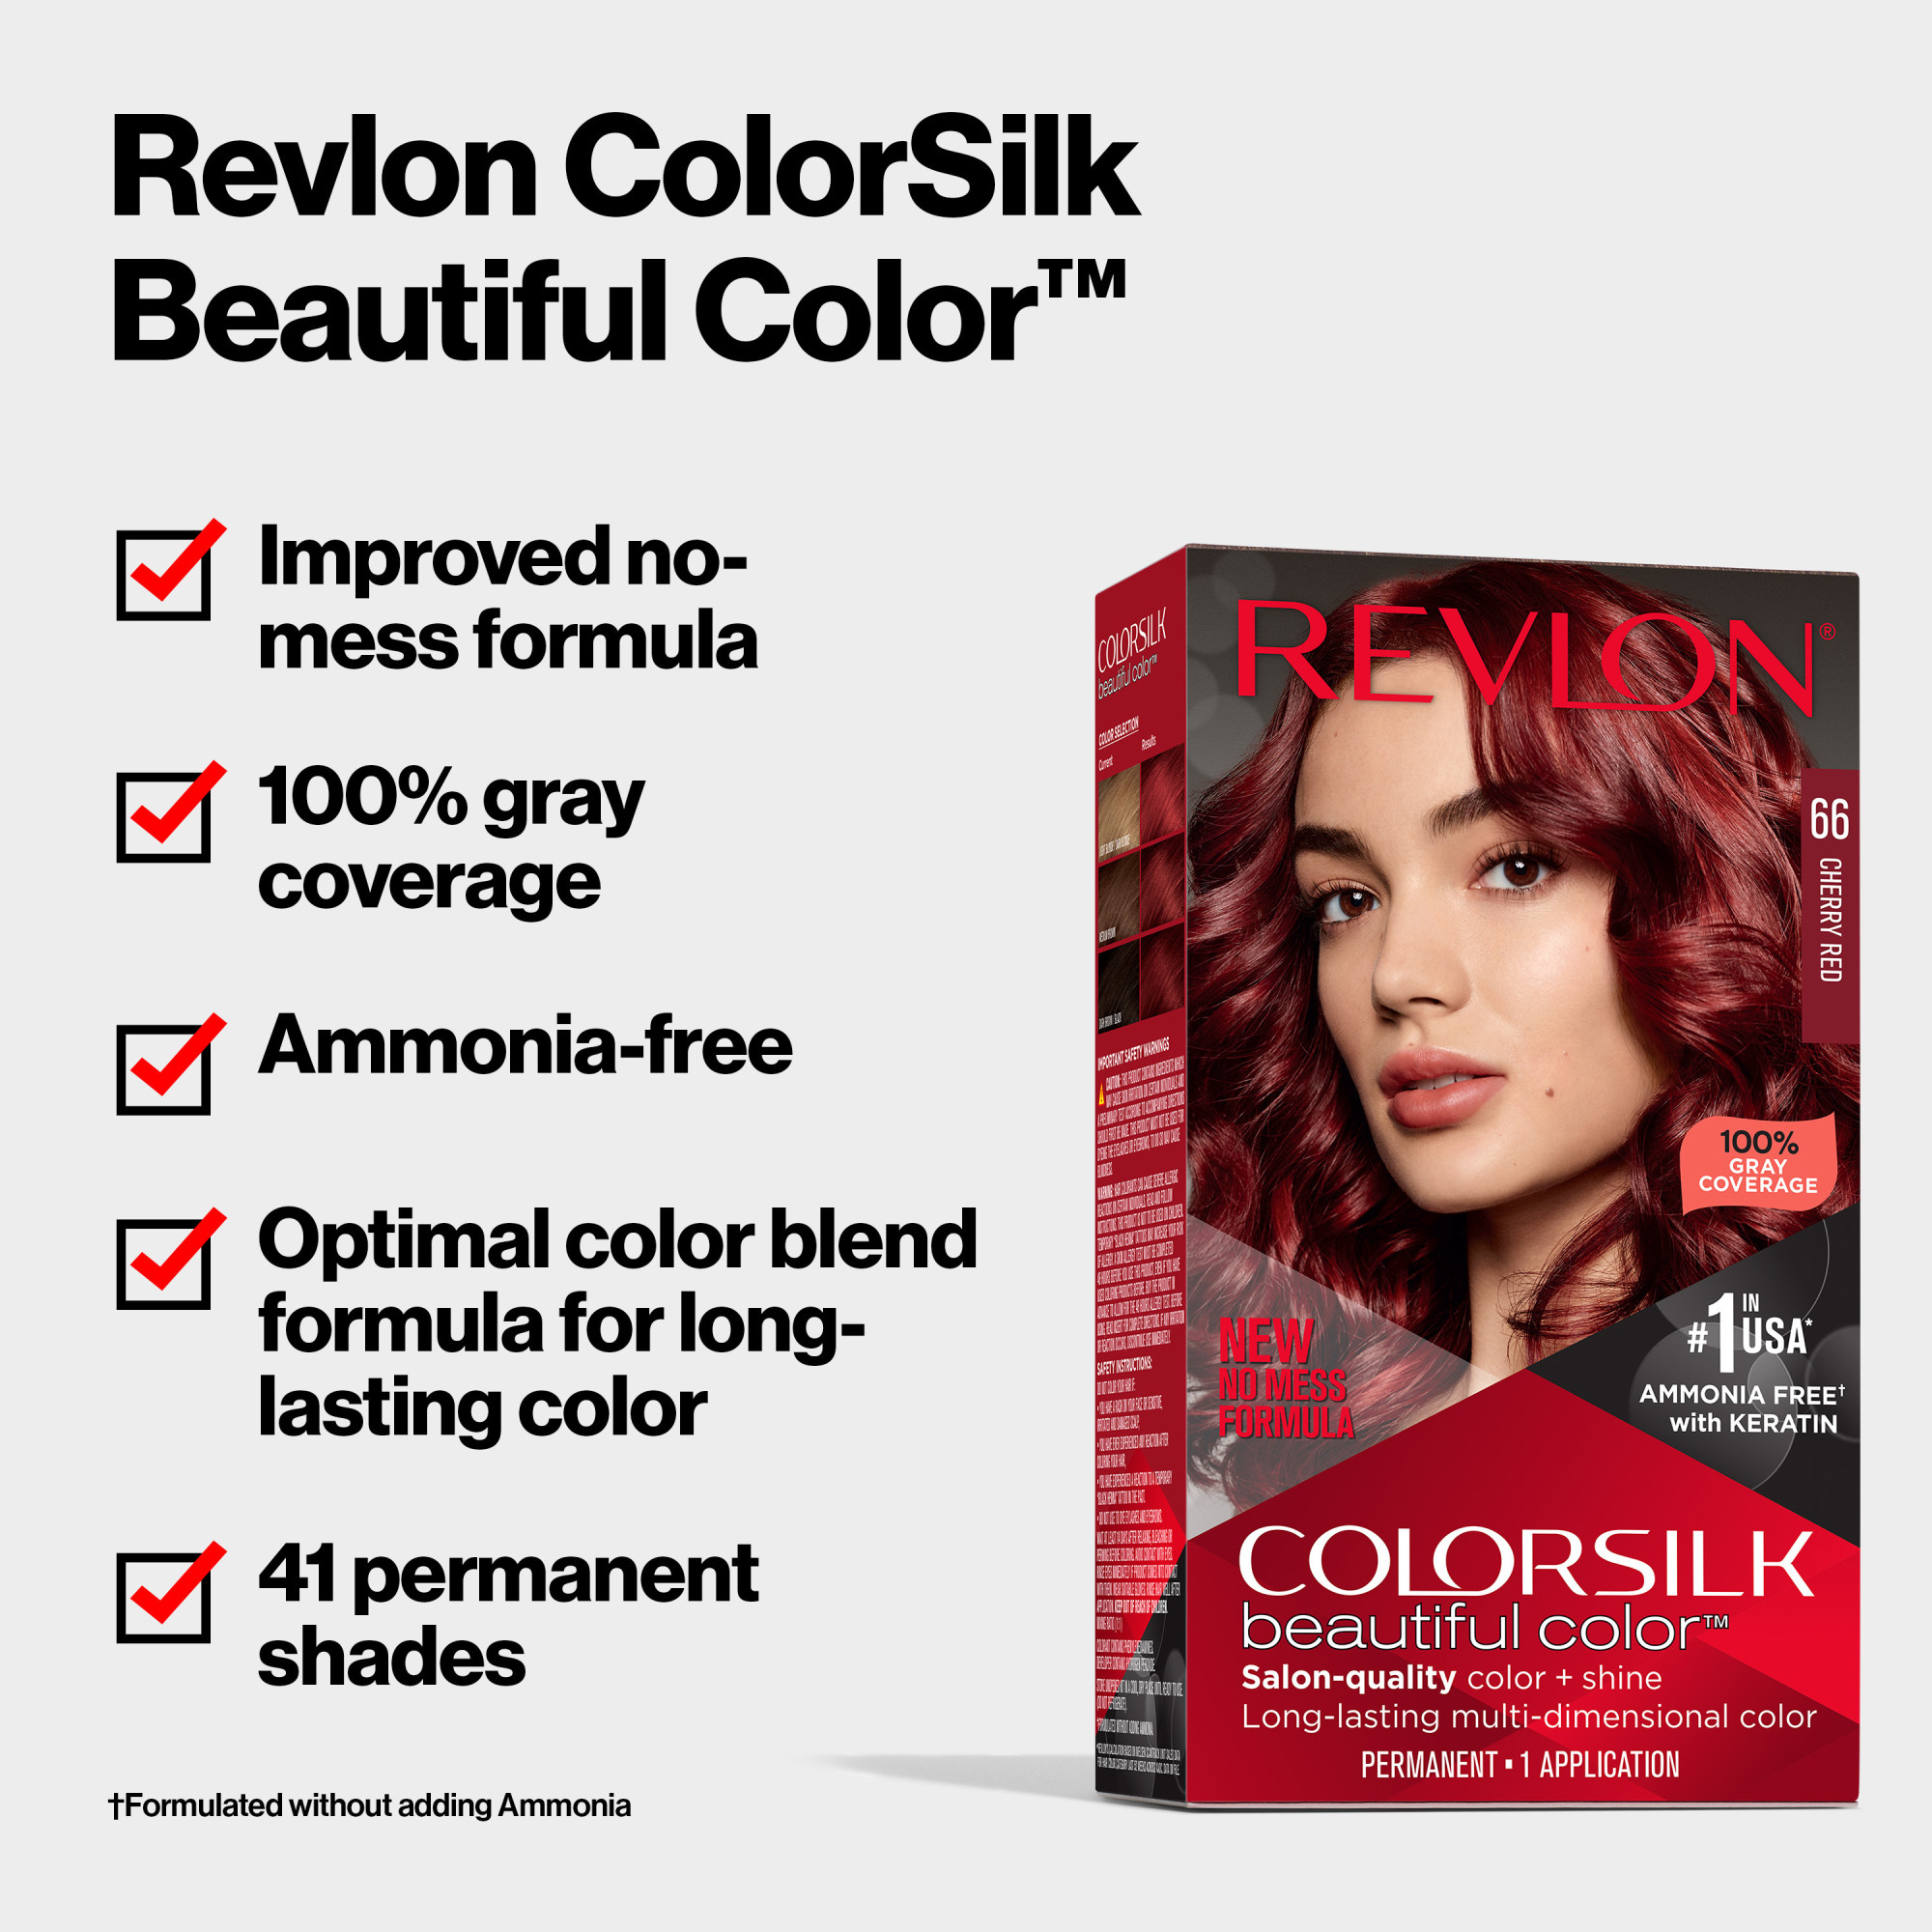 NEW Revlon Colorsilk Beautiful Permanent Hair Color, No Mess Formula,  081 Light Blonde, 1 Pack - image 4 of 14